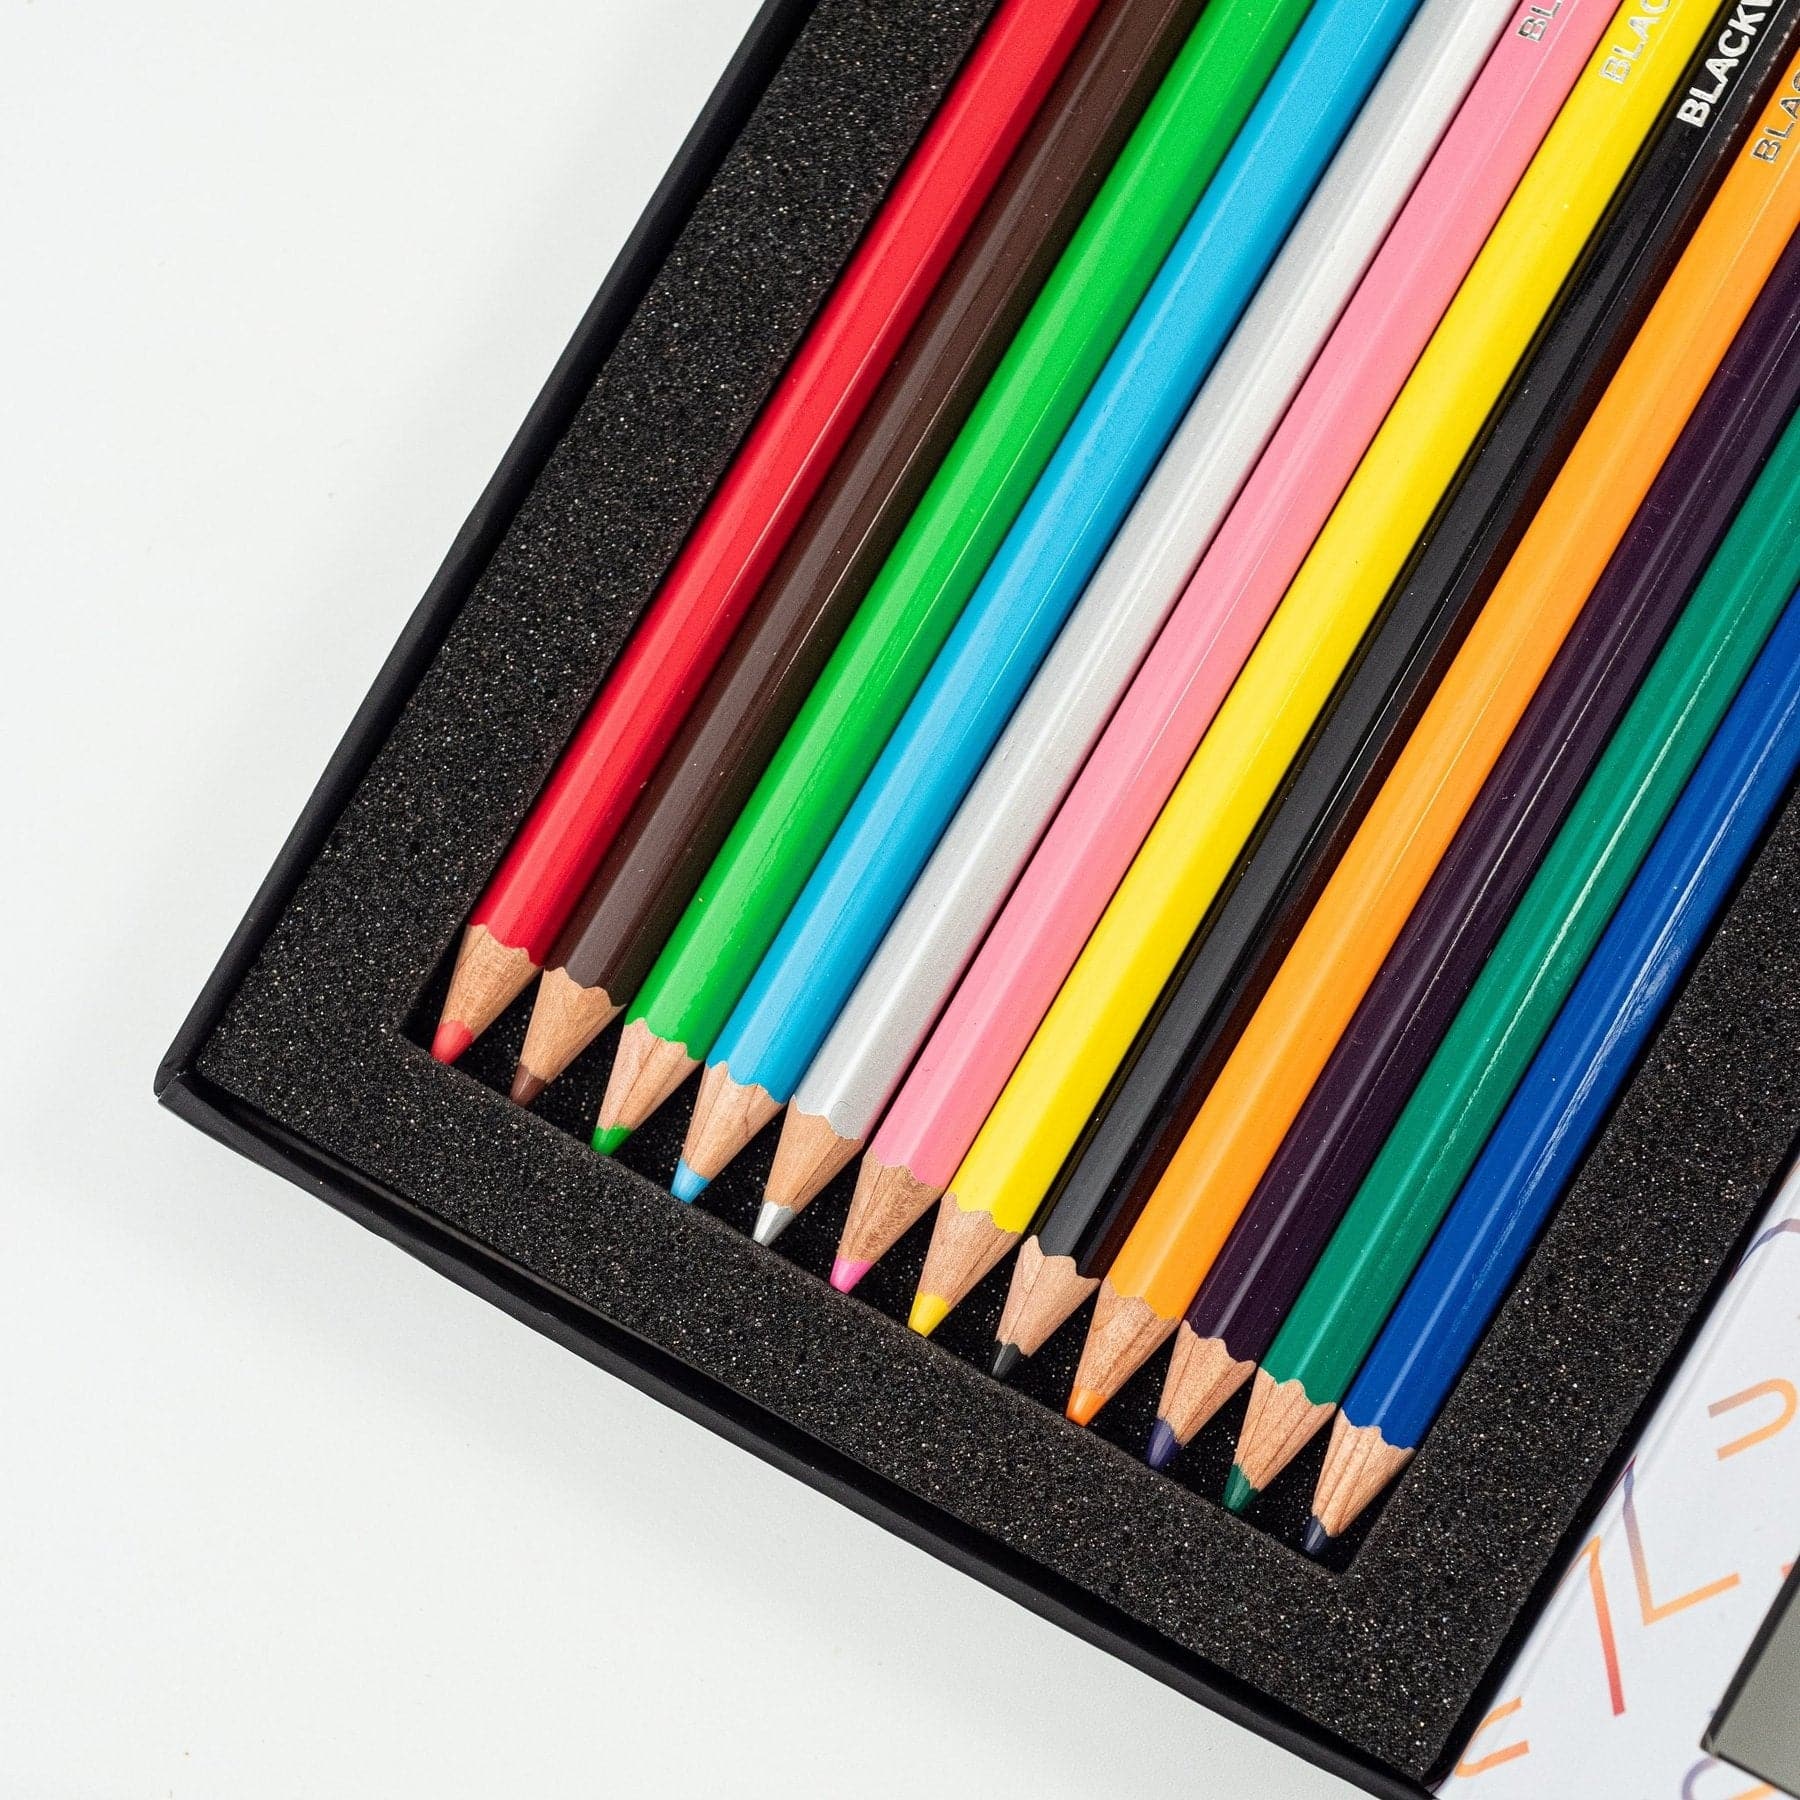 Blackwing Colors 12 Pencils